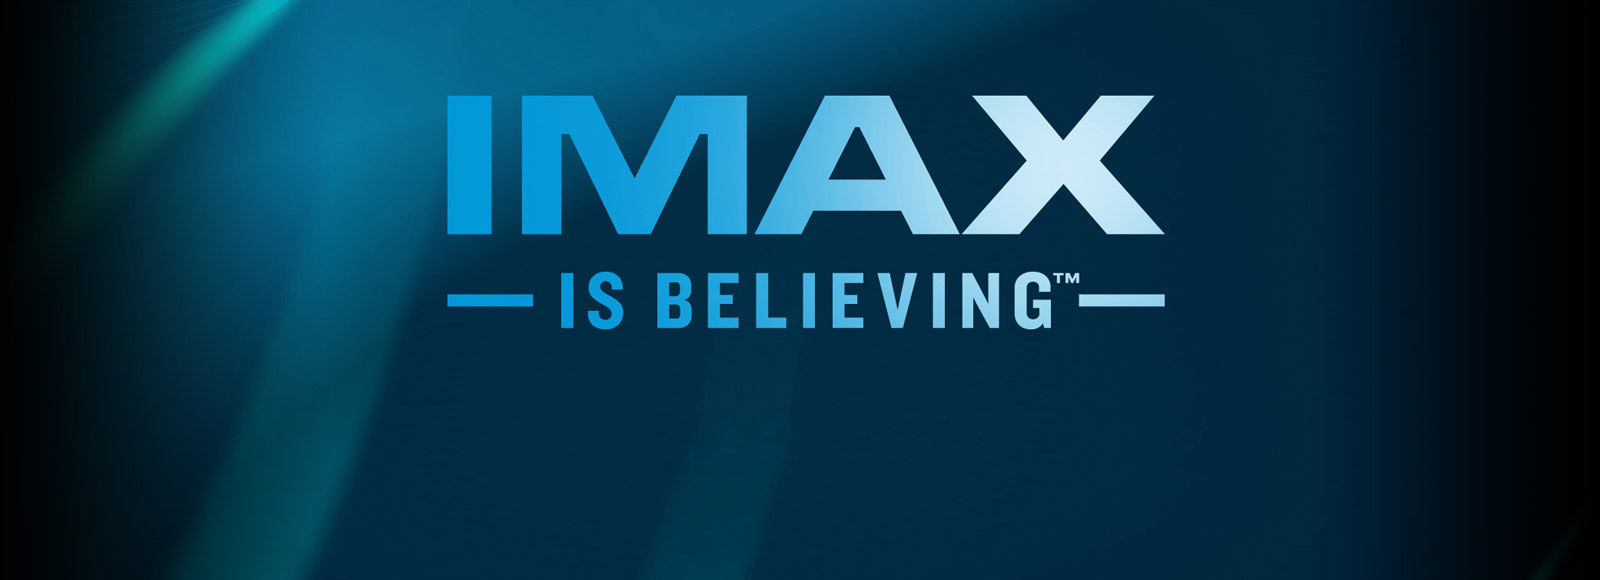 imax 3d logo